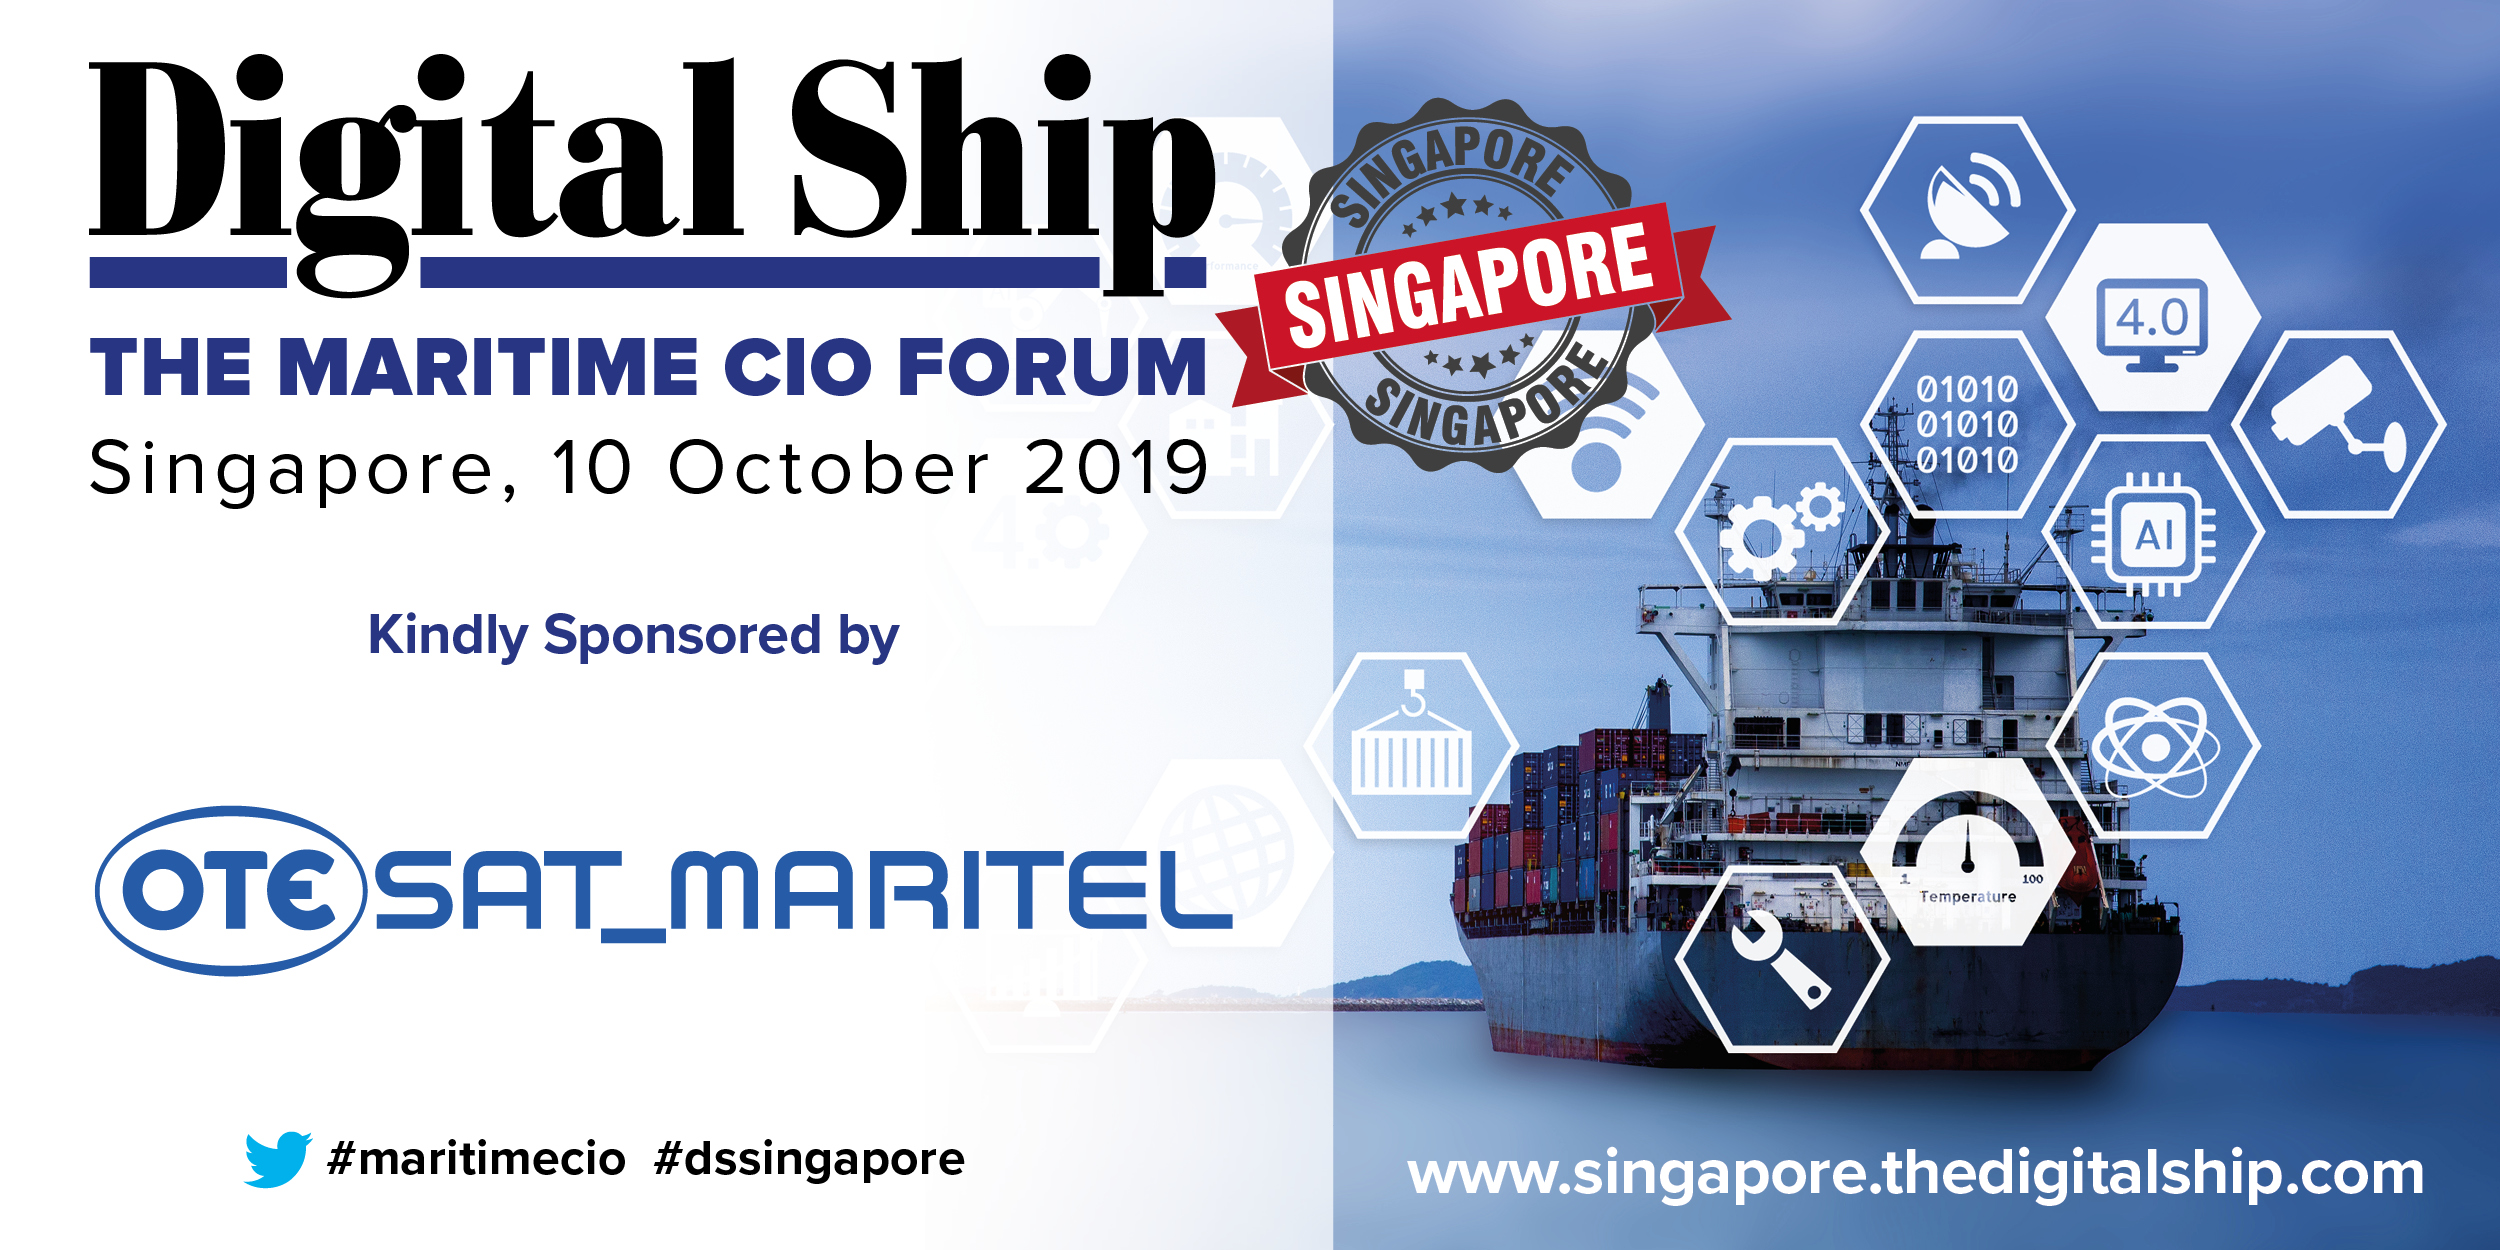 Participation at Digital Ship The Maritime CIO Forum in Singapore